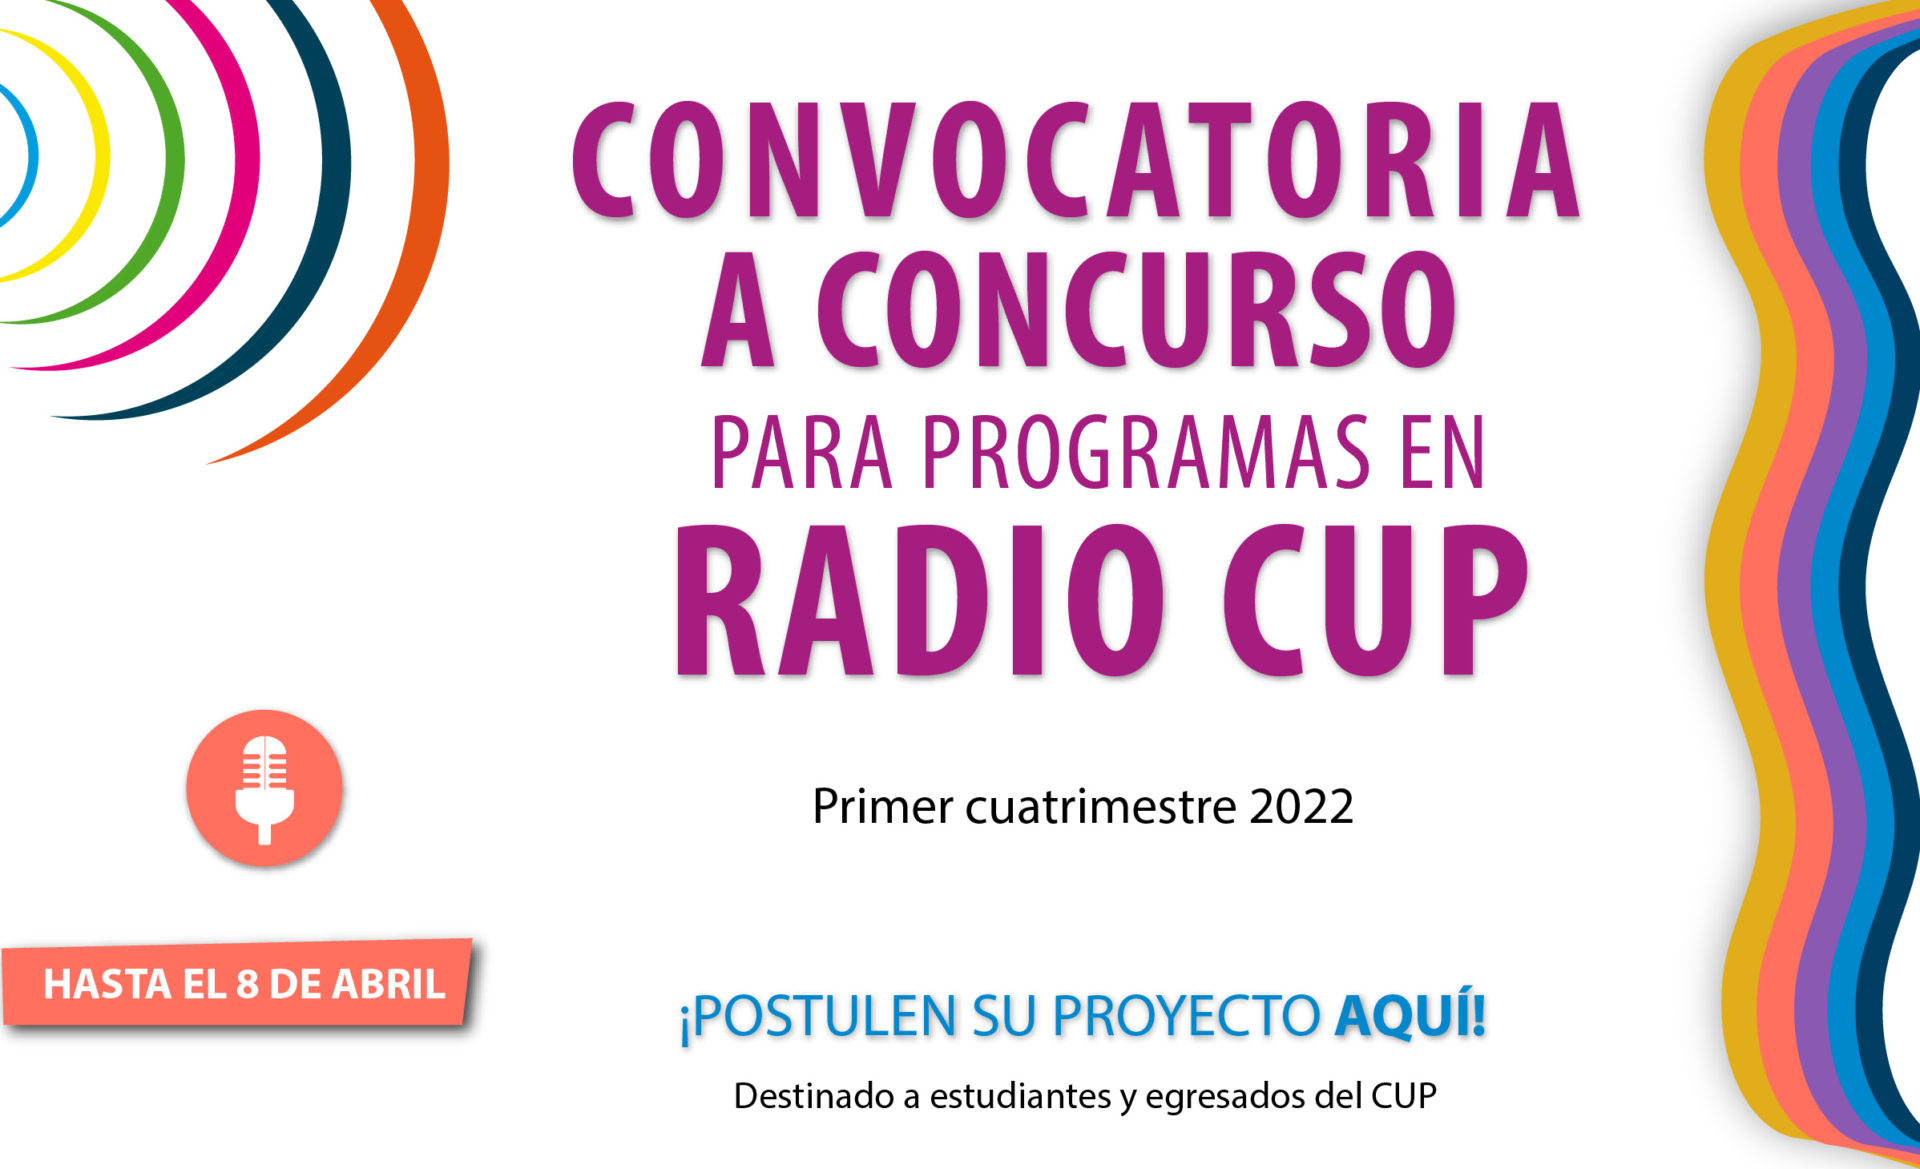 Convocatoria a Concurso de Programas para Radio CUP